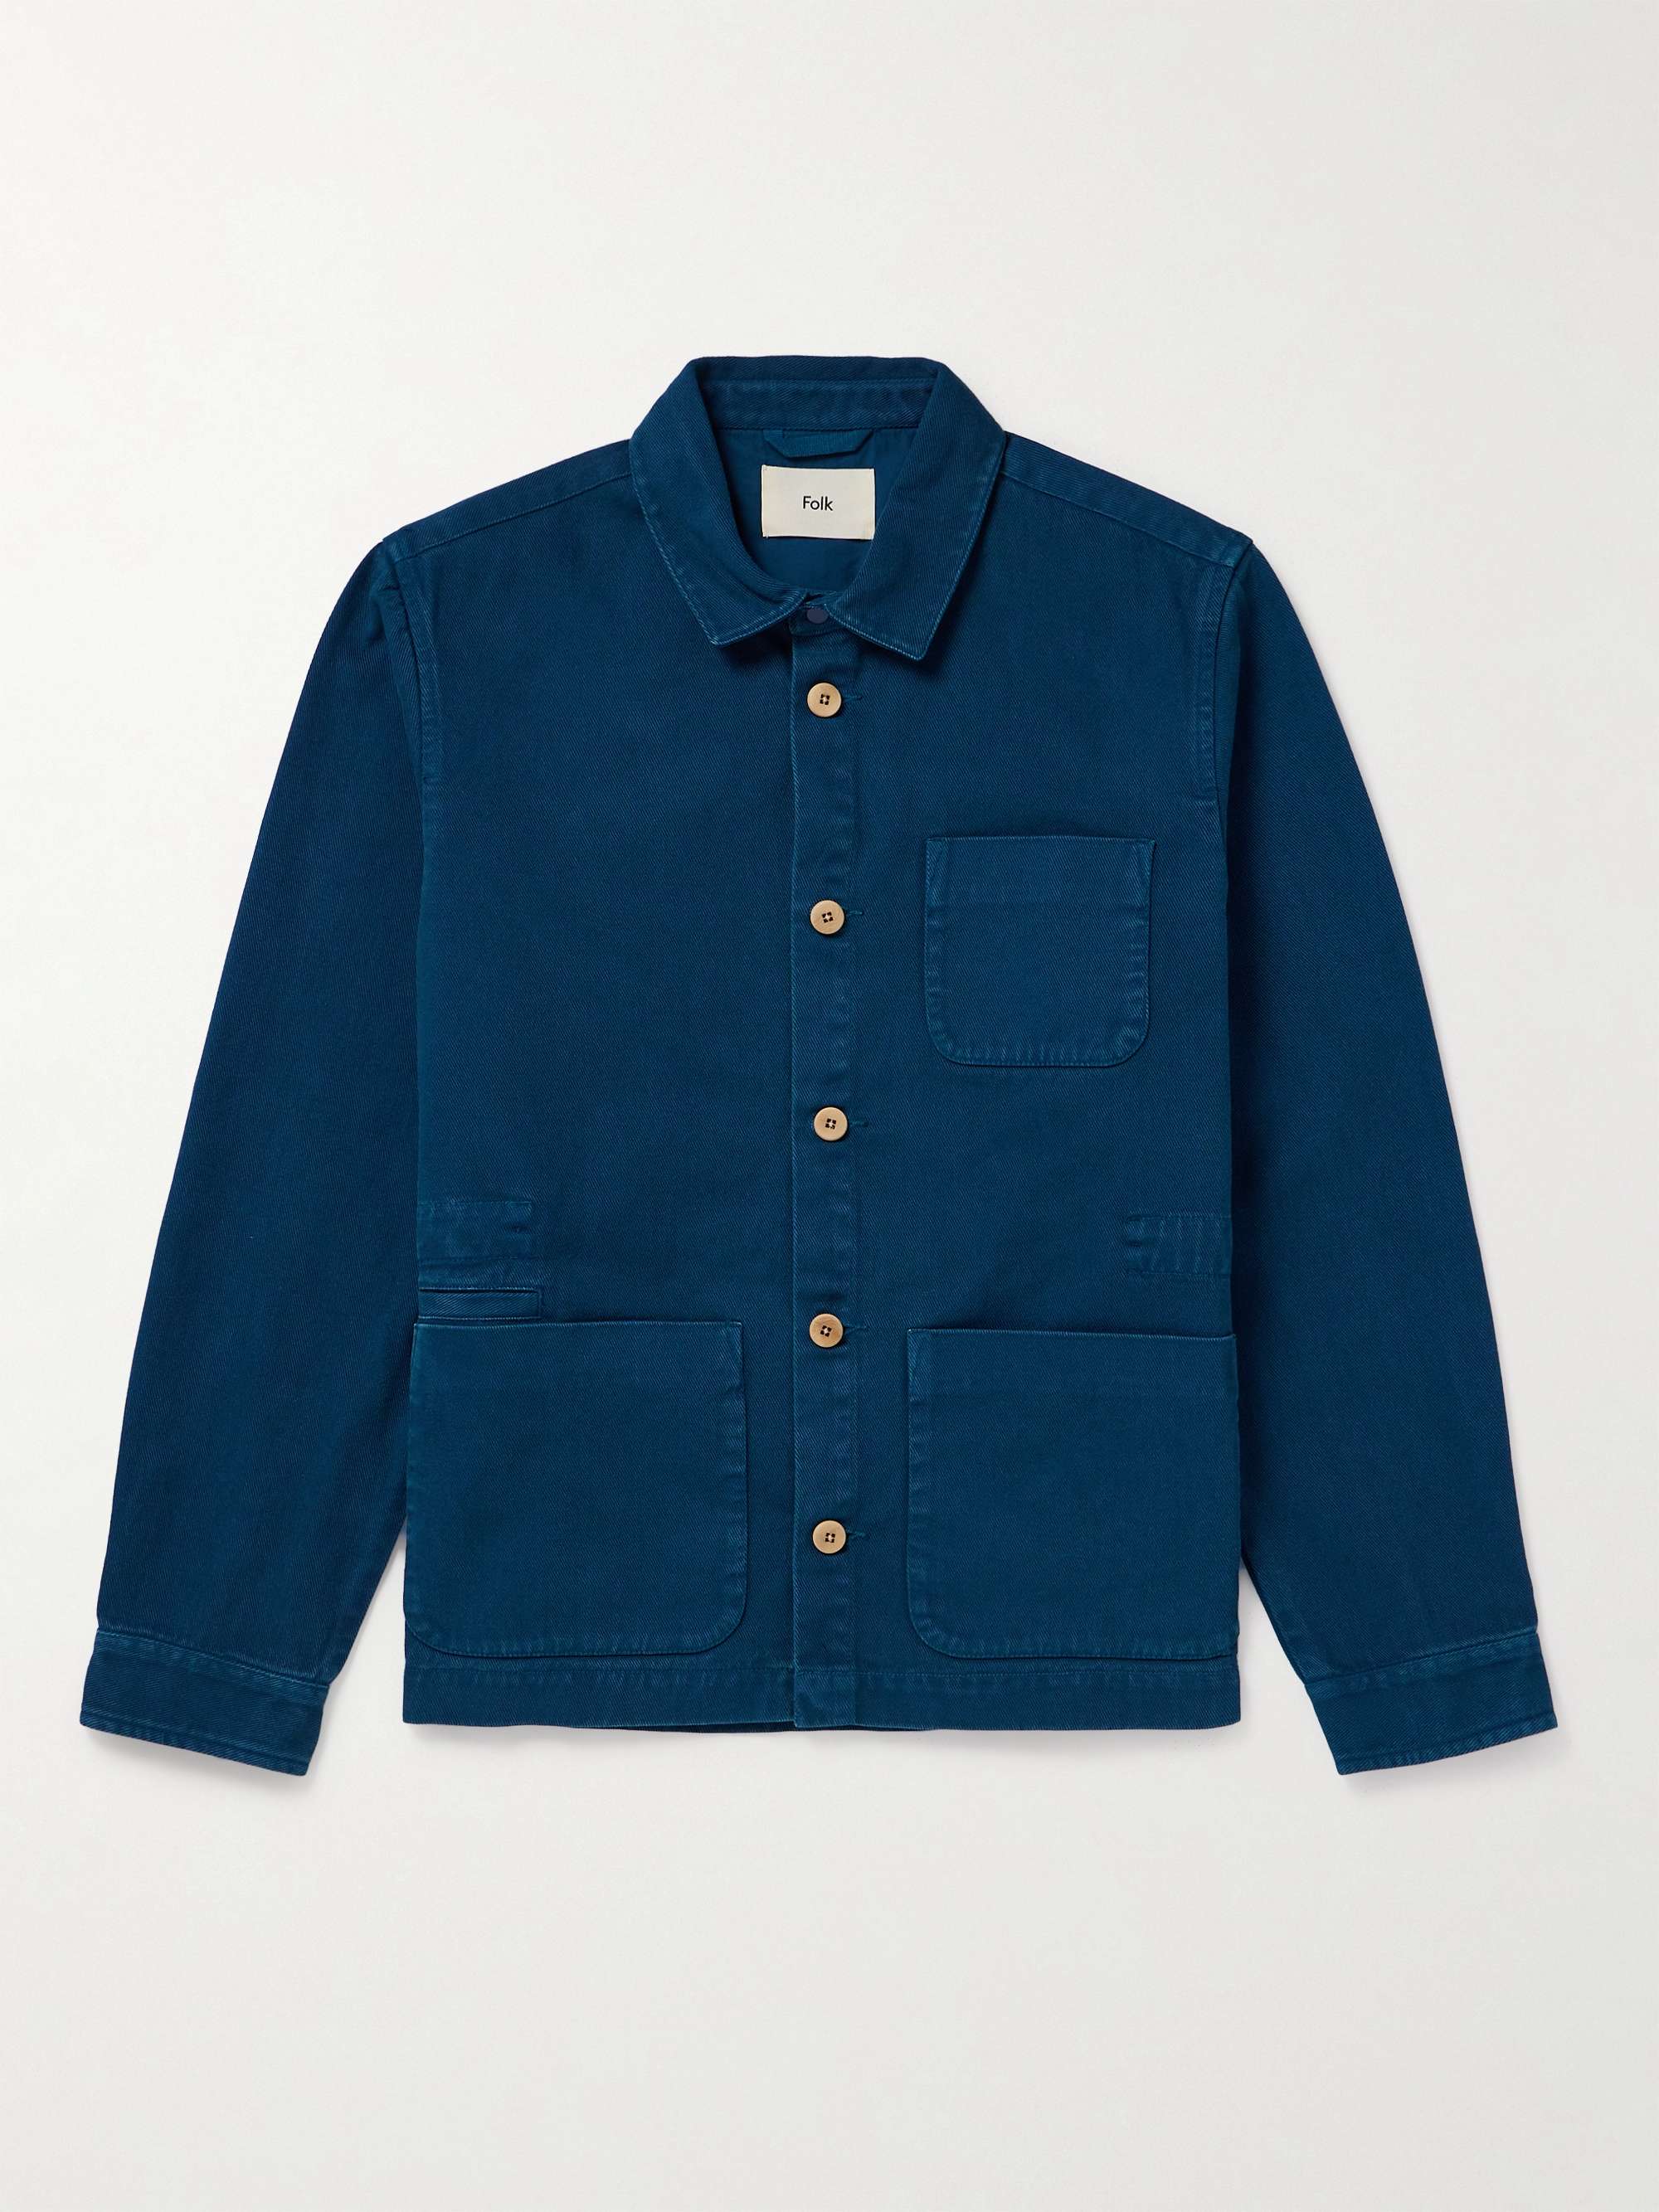 FOLK Assembly Cotton-Twill Jacket for Men | MR PORTER